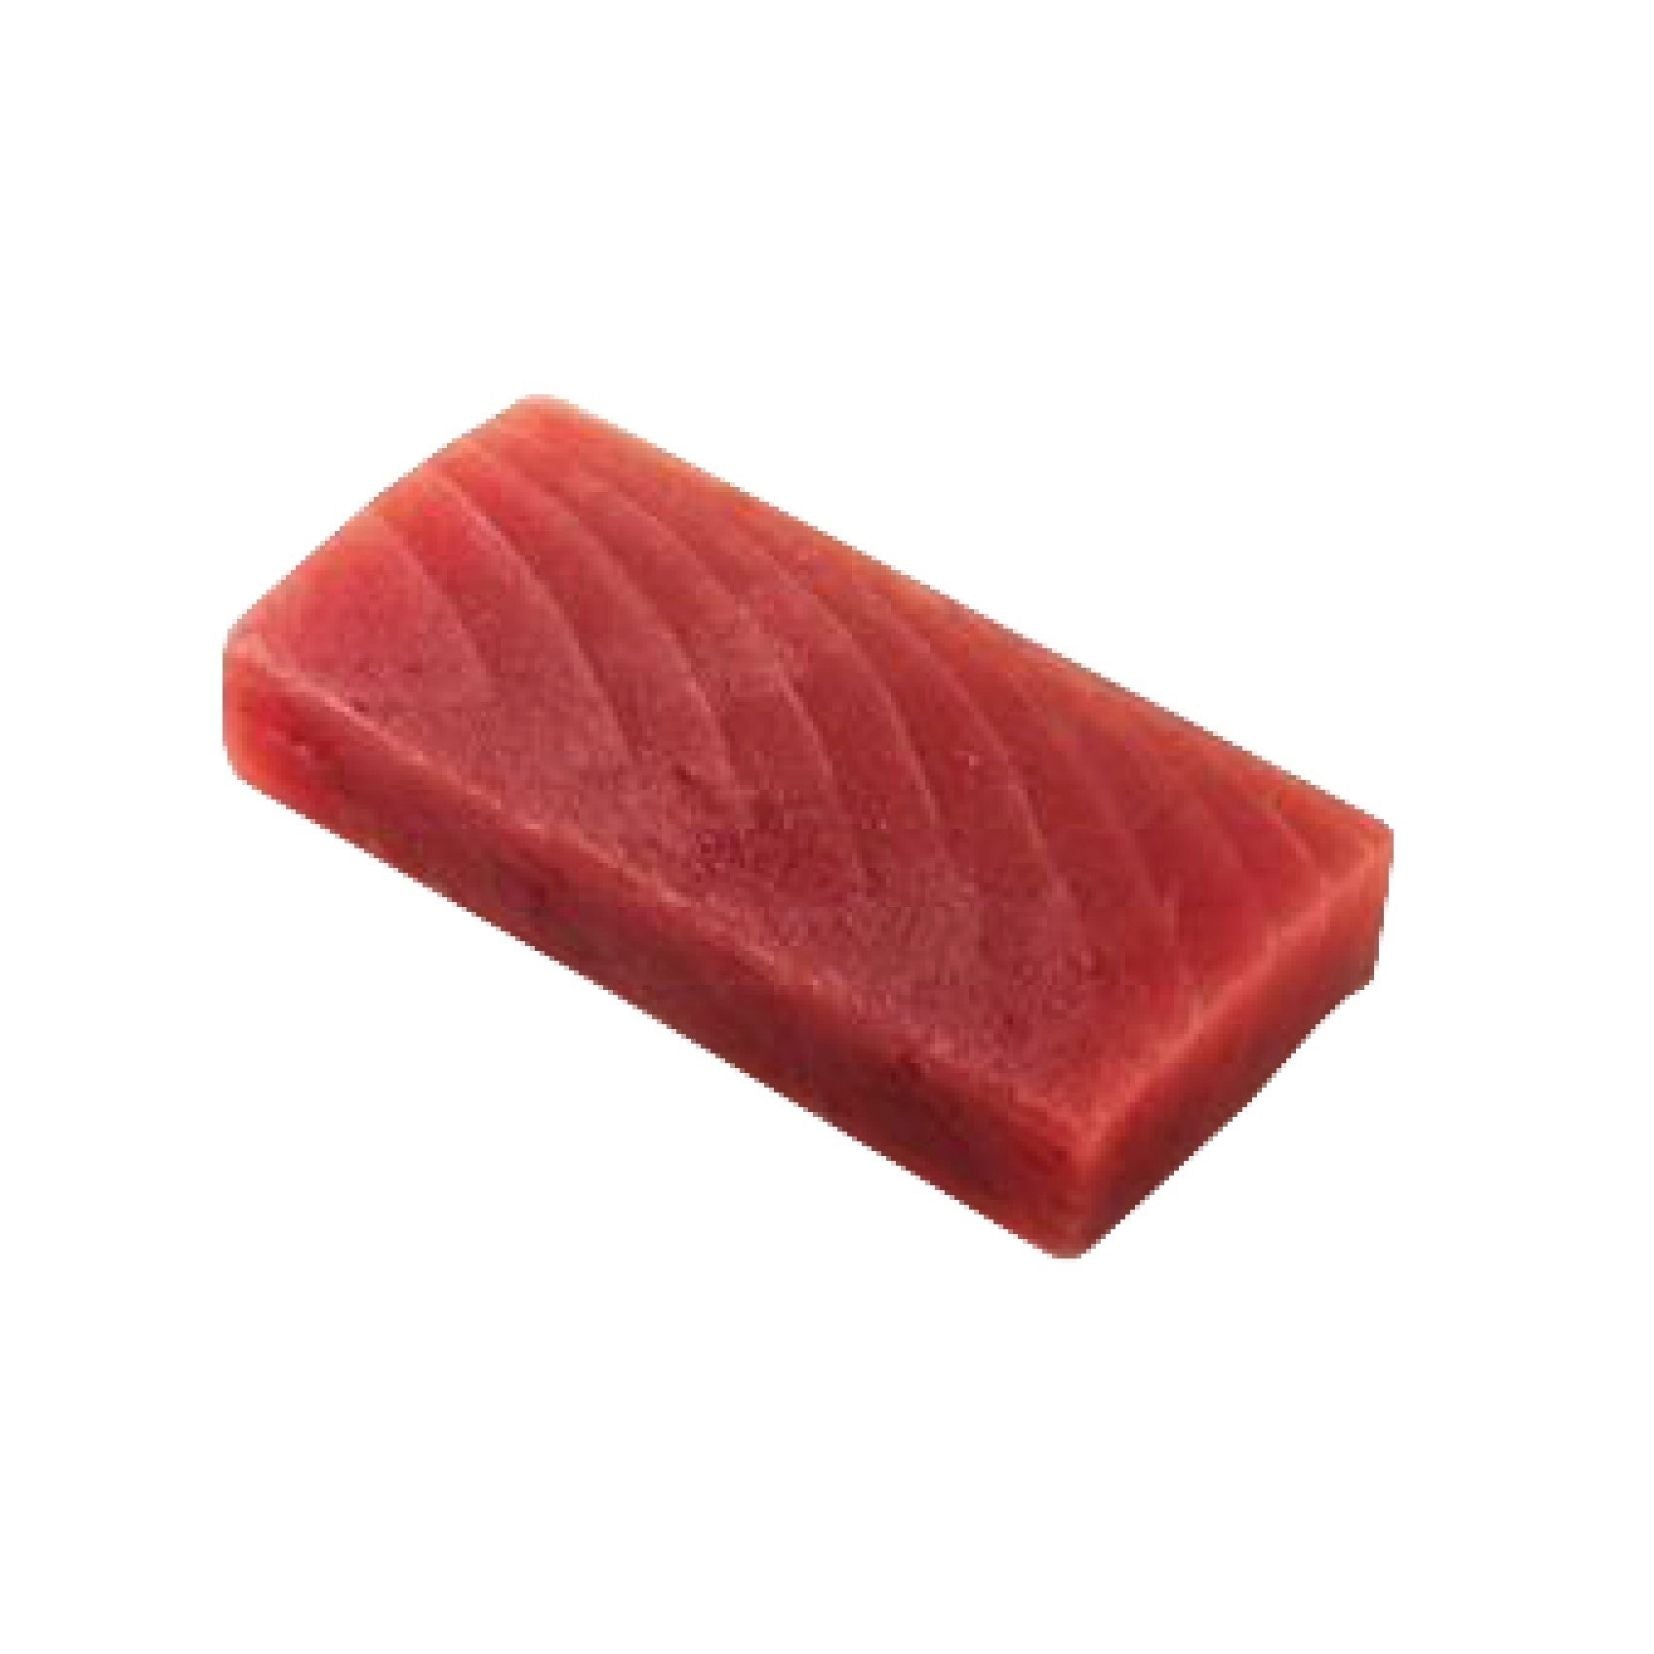 Super Bluefin Tuna - Akami (Frozen) - 400g Approx.